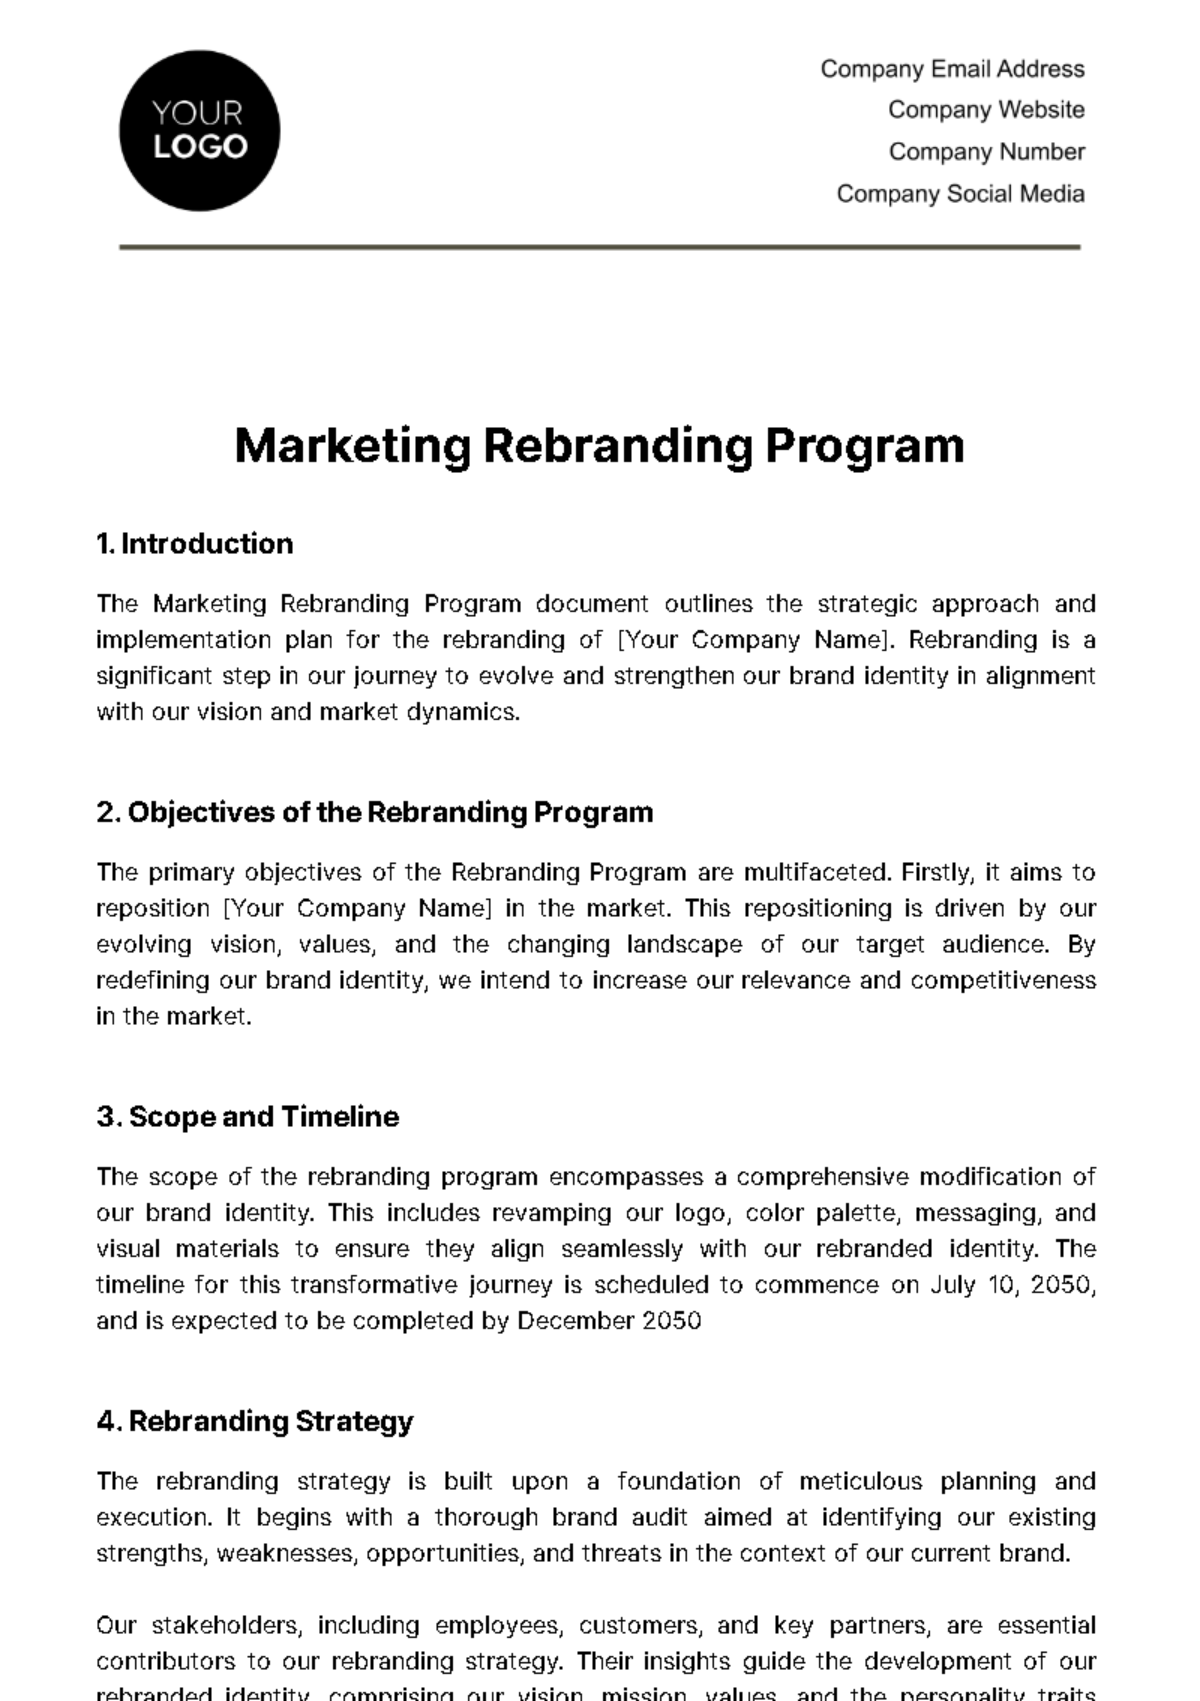 Marketing Rebranding Program Template